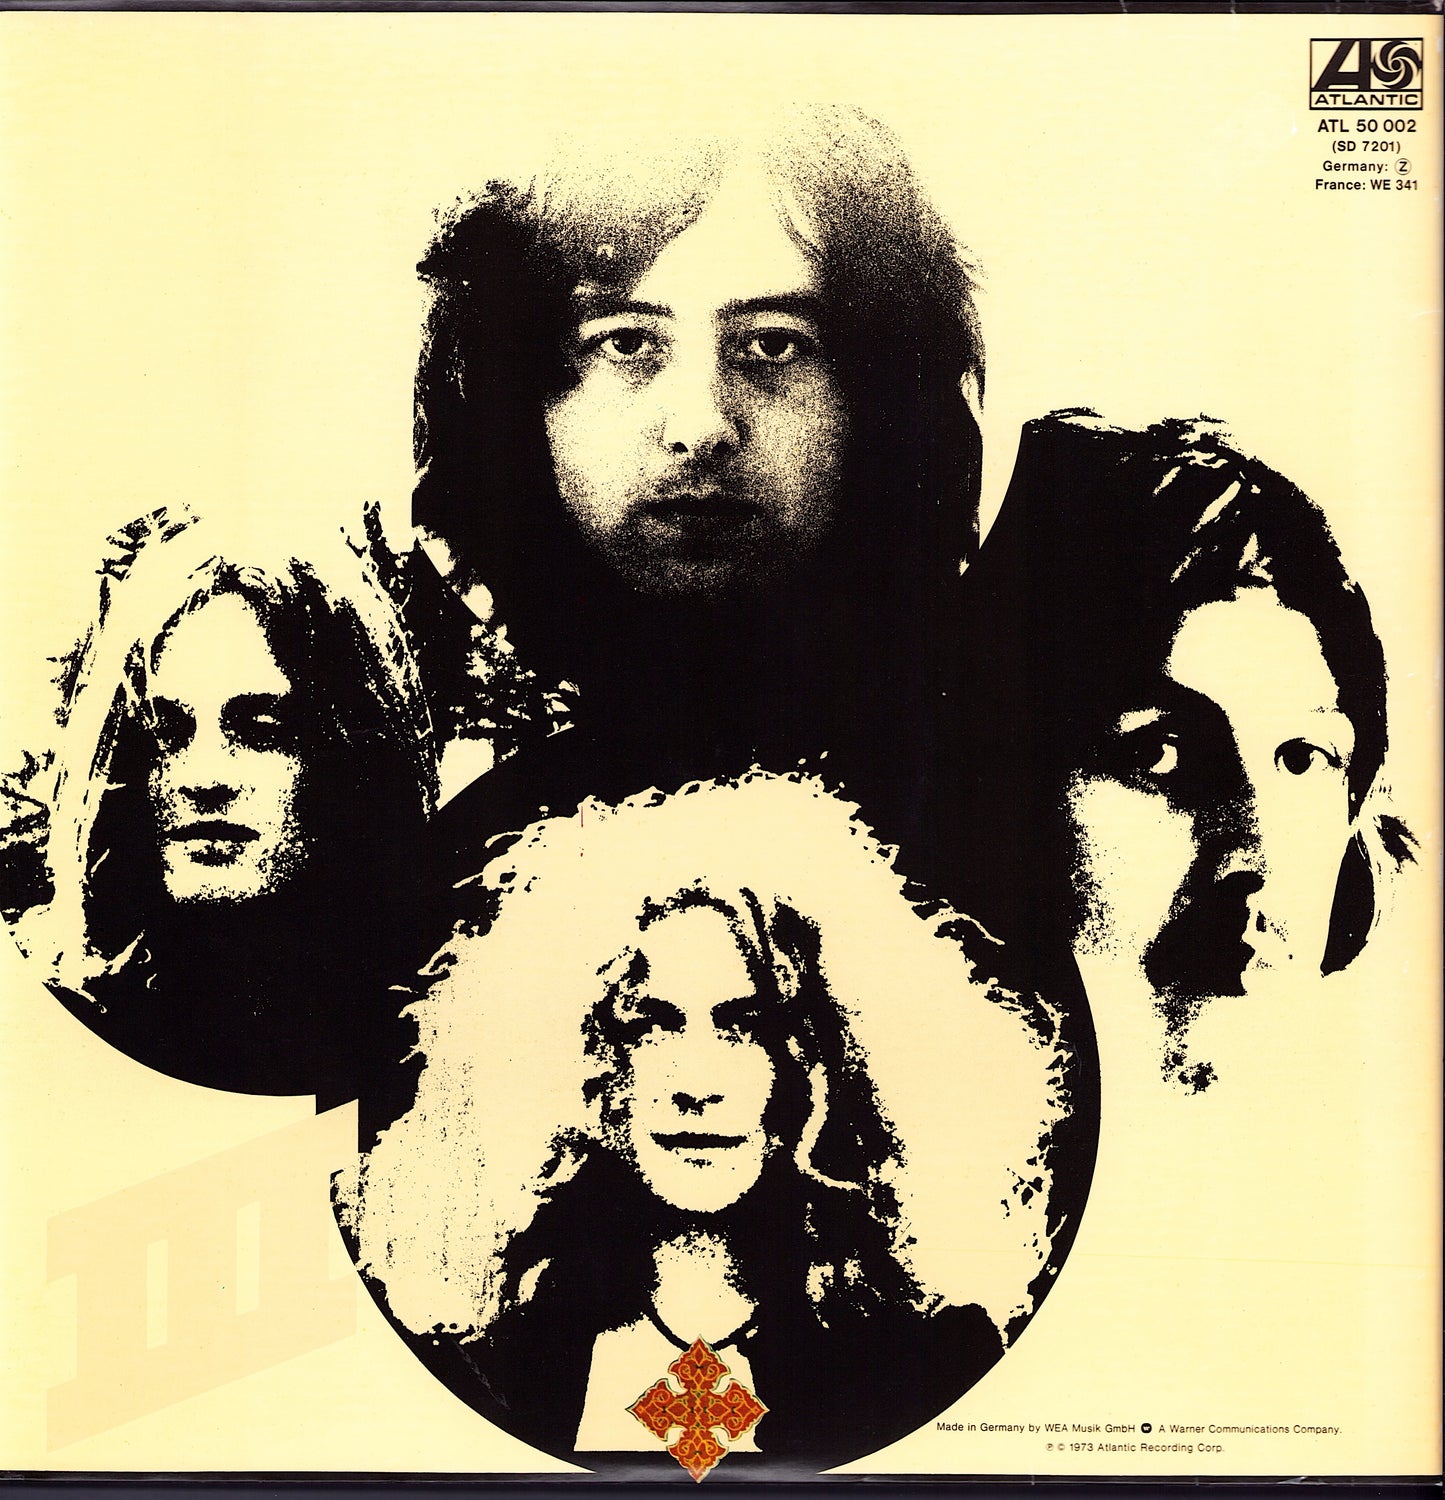 Led Zeppelin ‎- Led Zeppelin III Vinyl LP